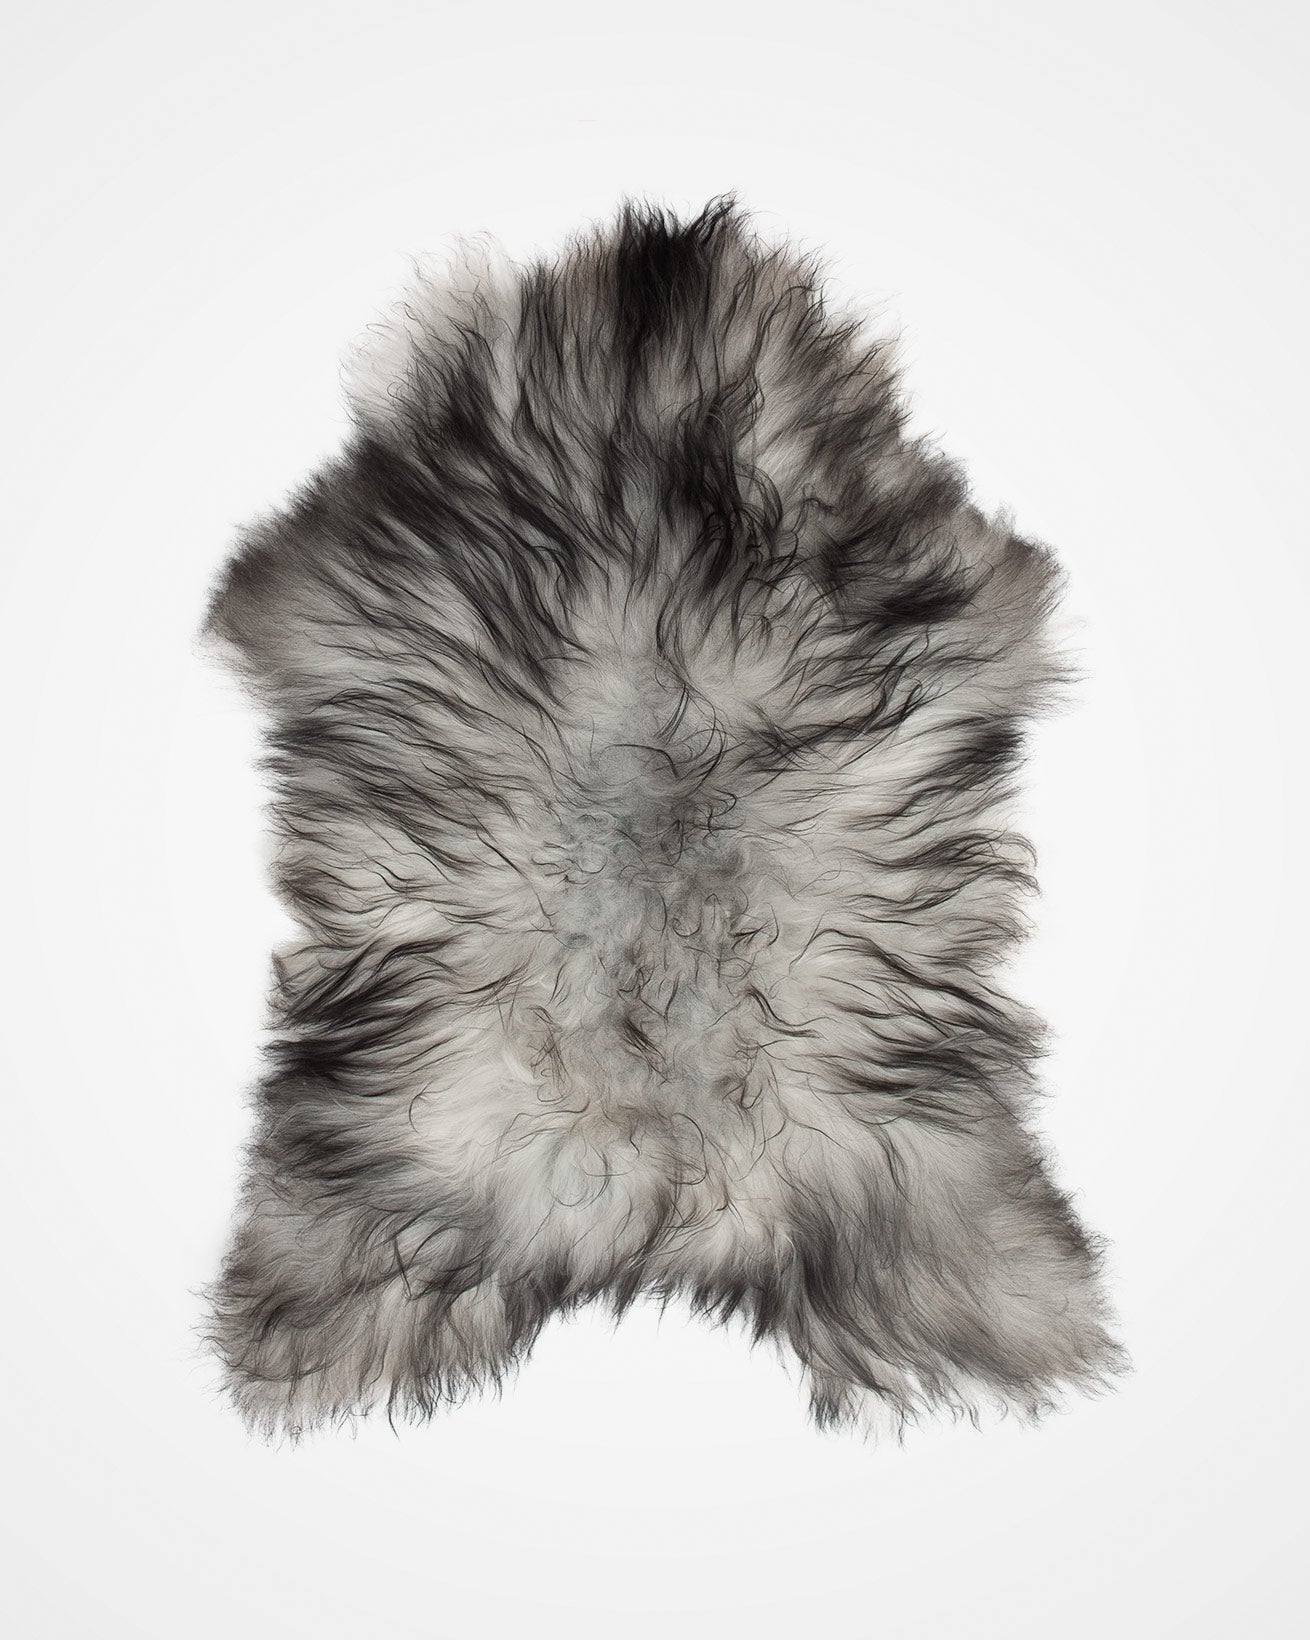 Sheepskin Icelandic - Longhaired in Natural Grey w. Black Tips